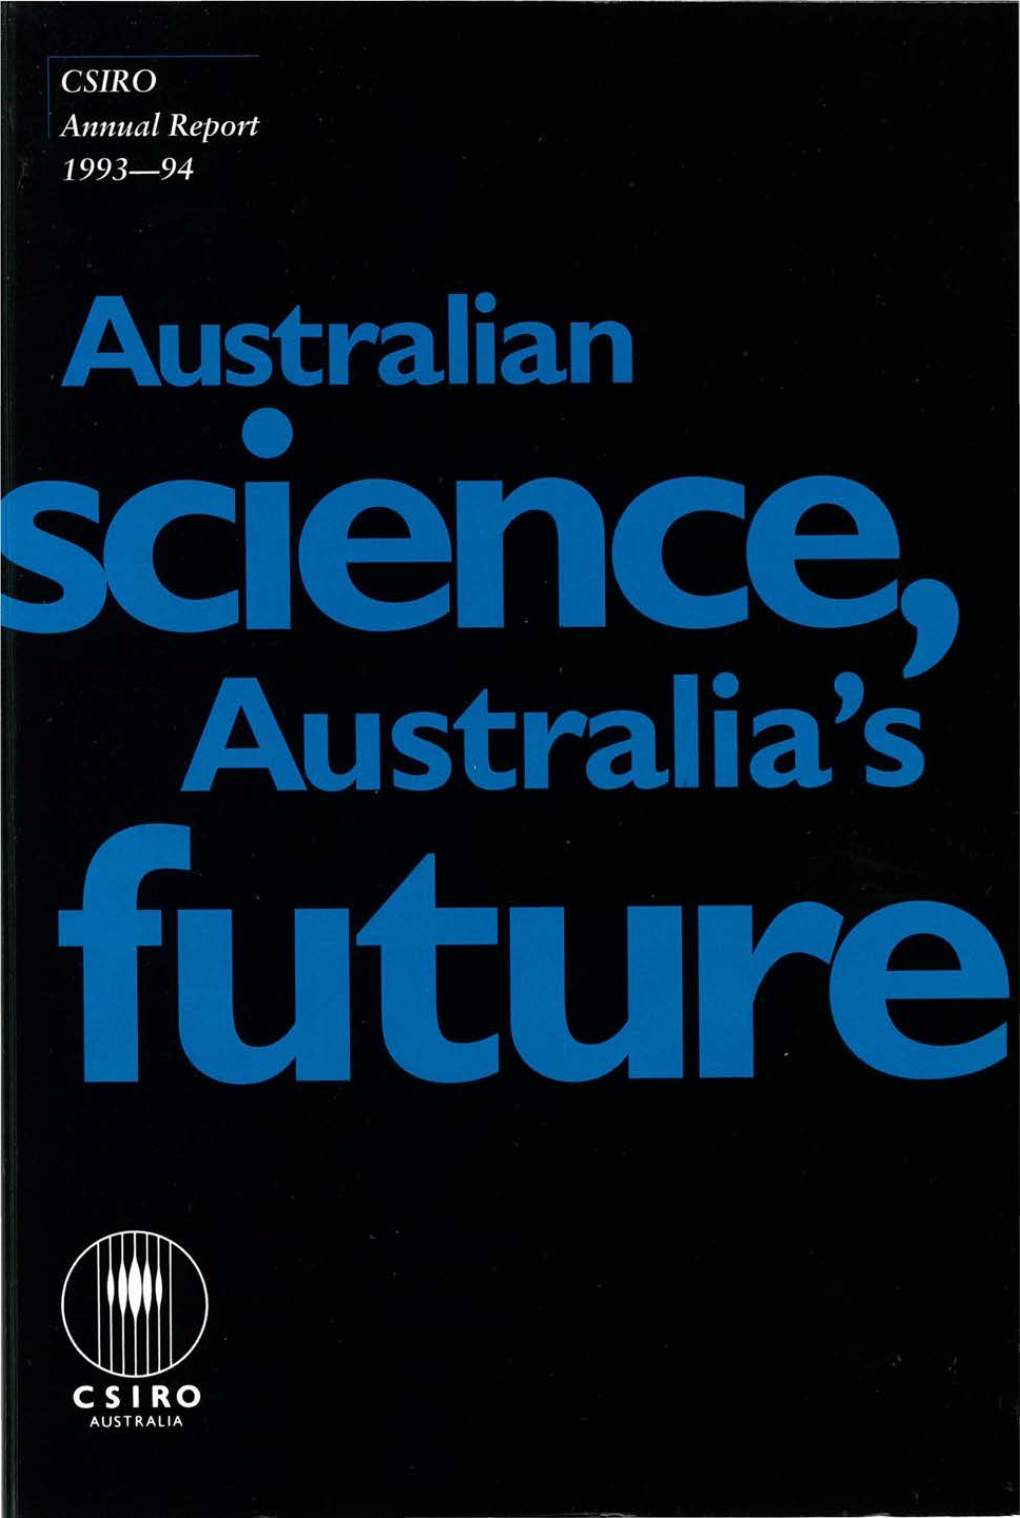 CSIRO Annual Report 1993 – 1994